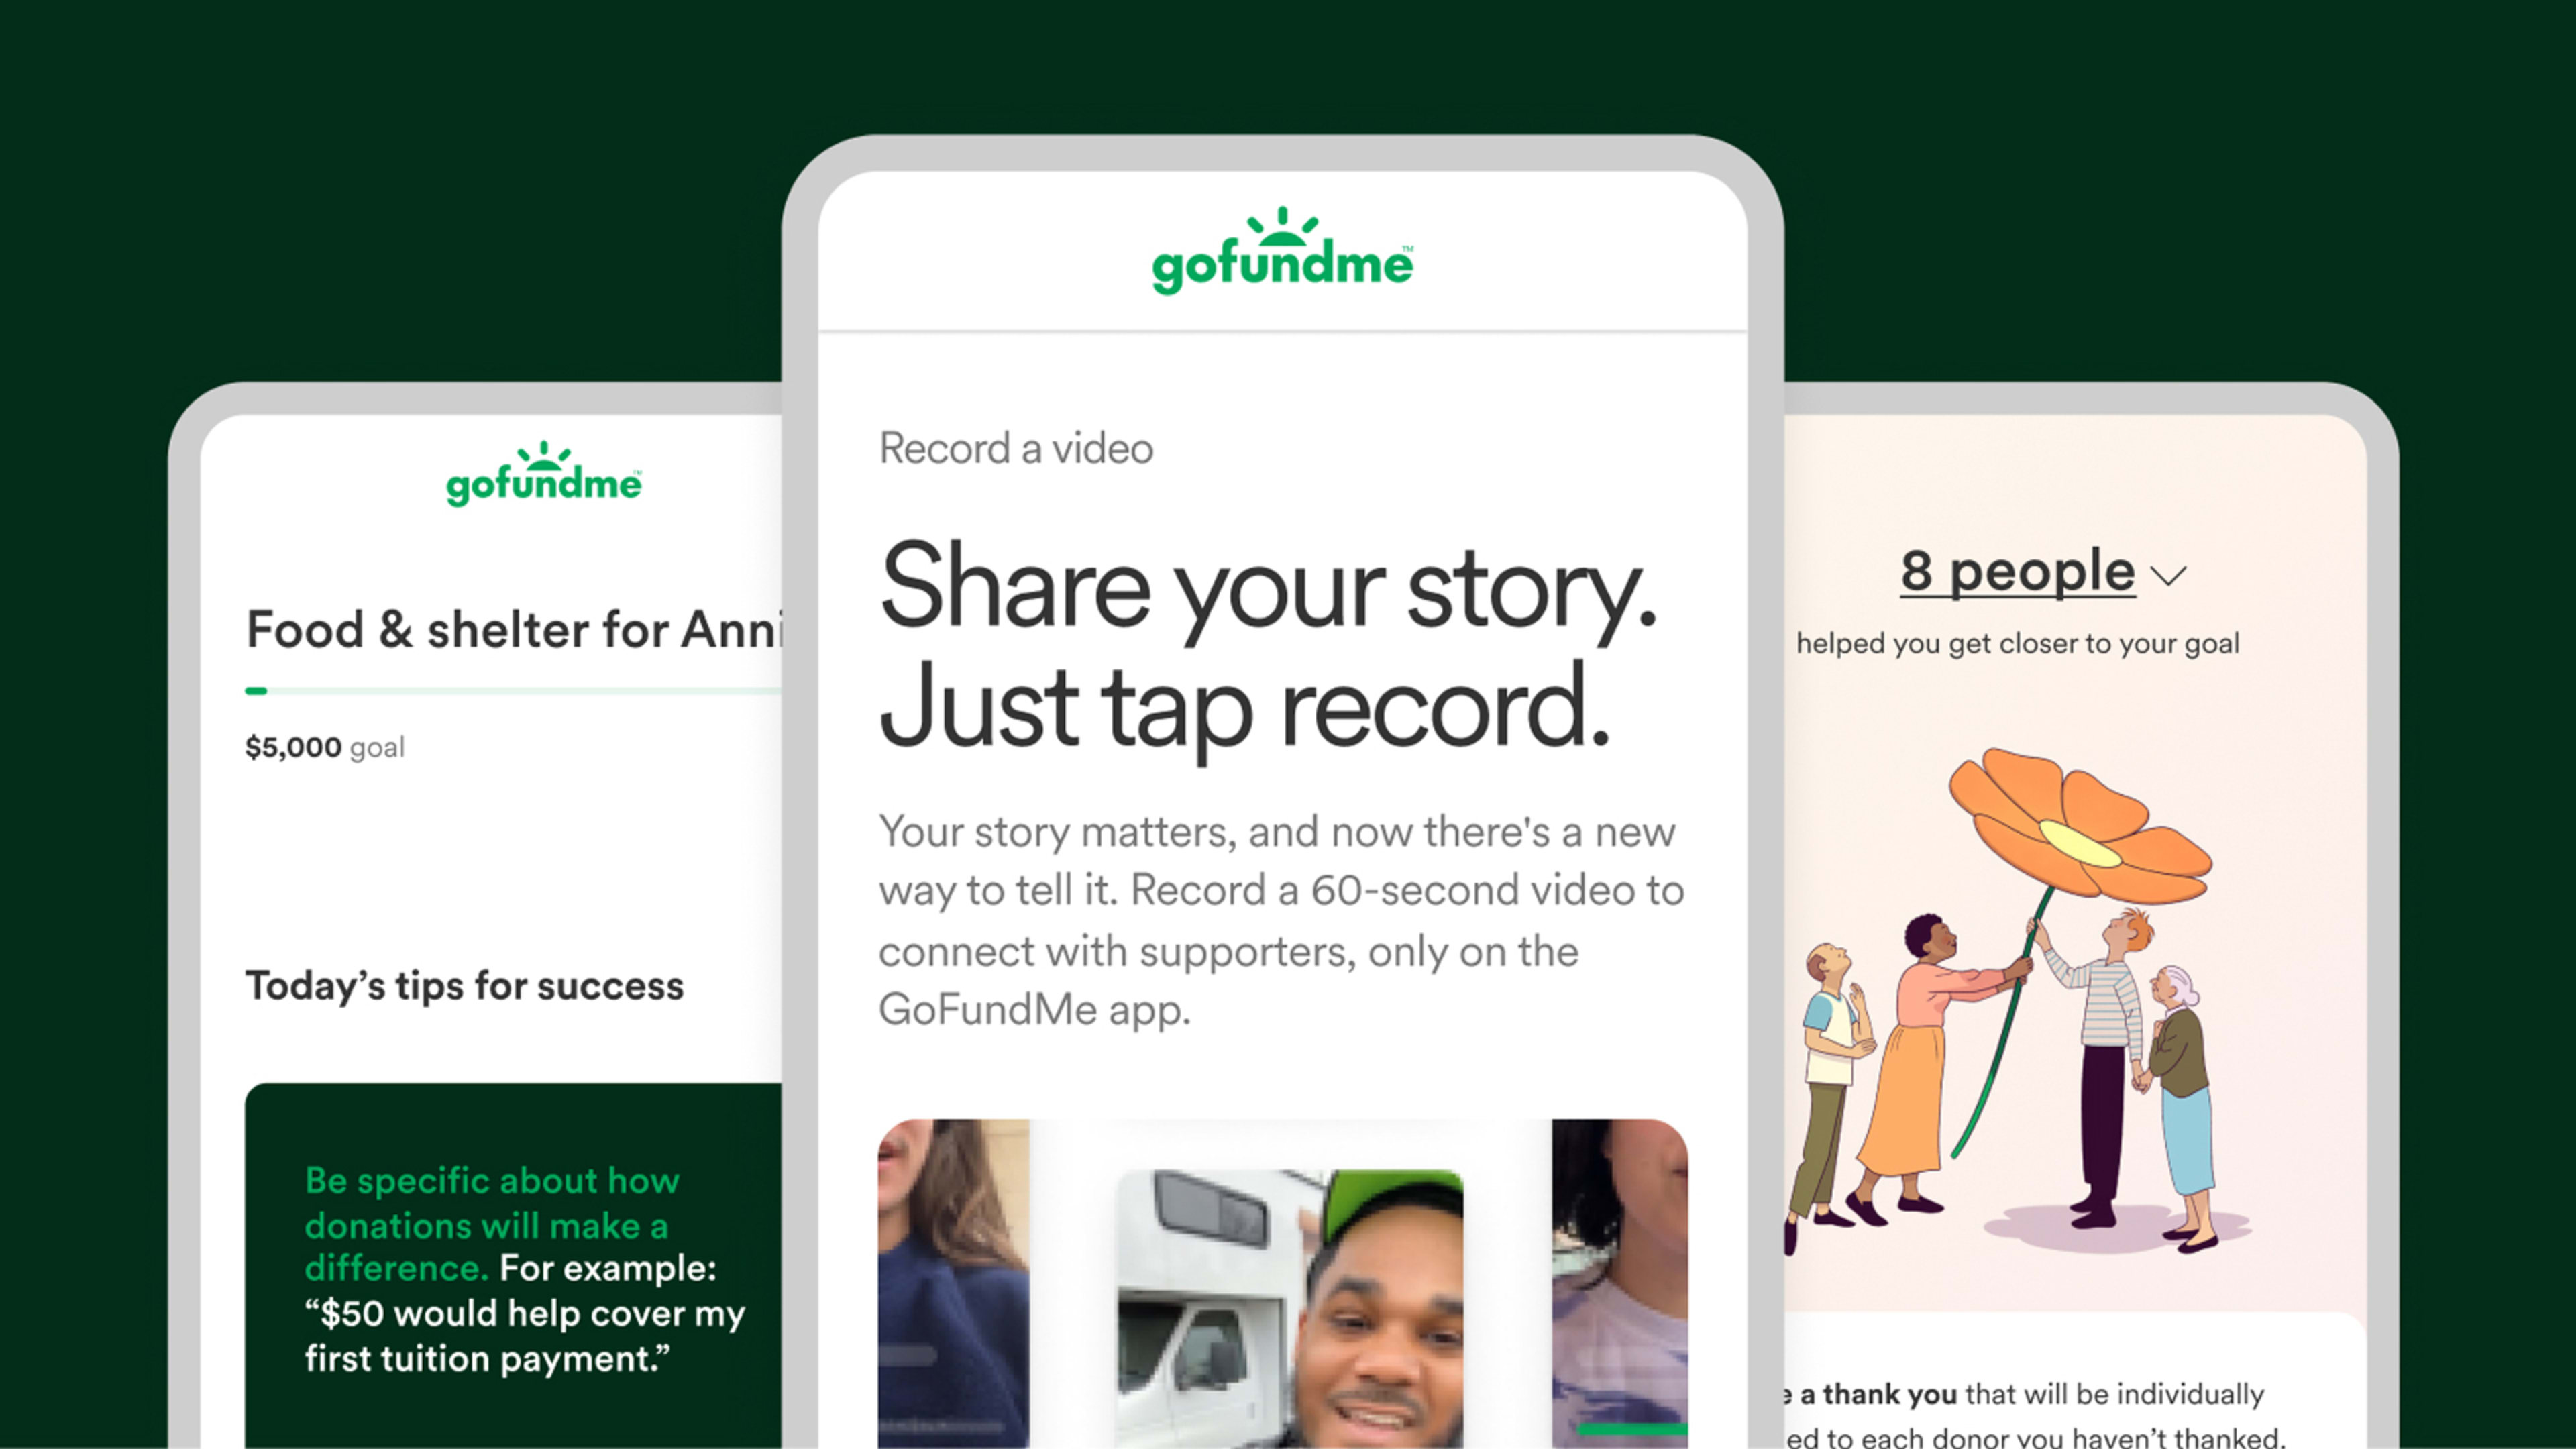 Exclusive: GoFundMe introducing Nextdoor partnership and option to upload video to donation platform